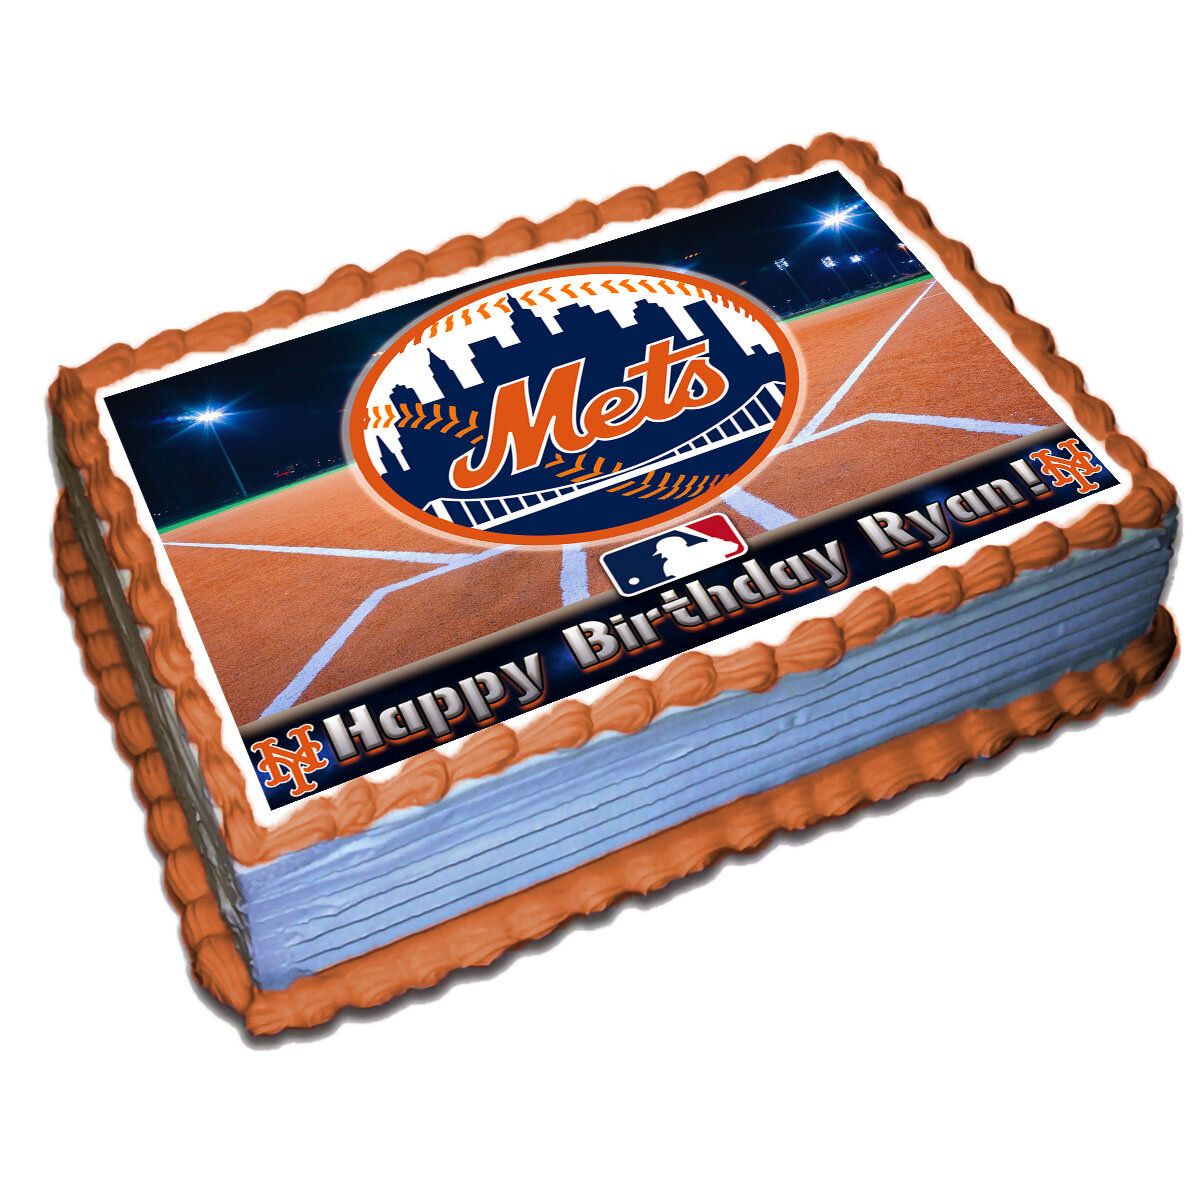 New York Rangers Cake Toppers 